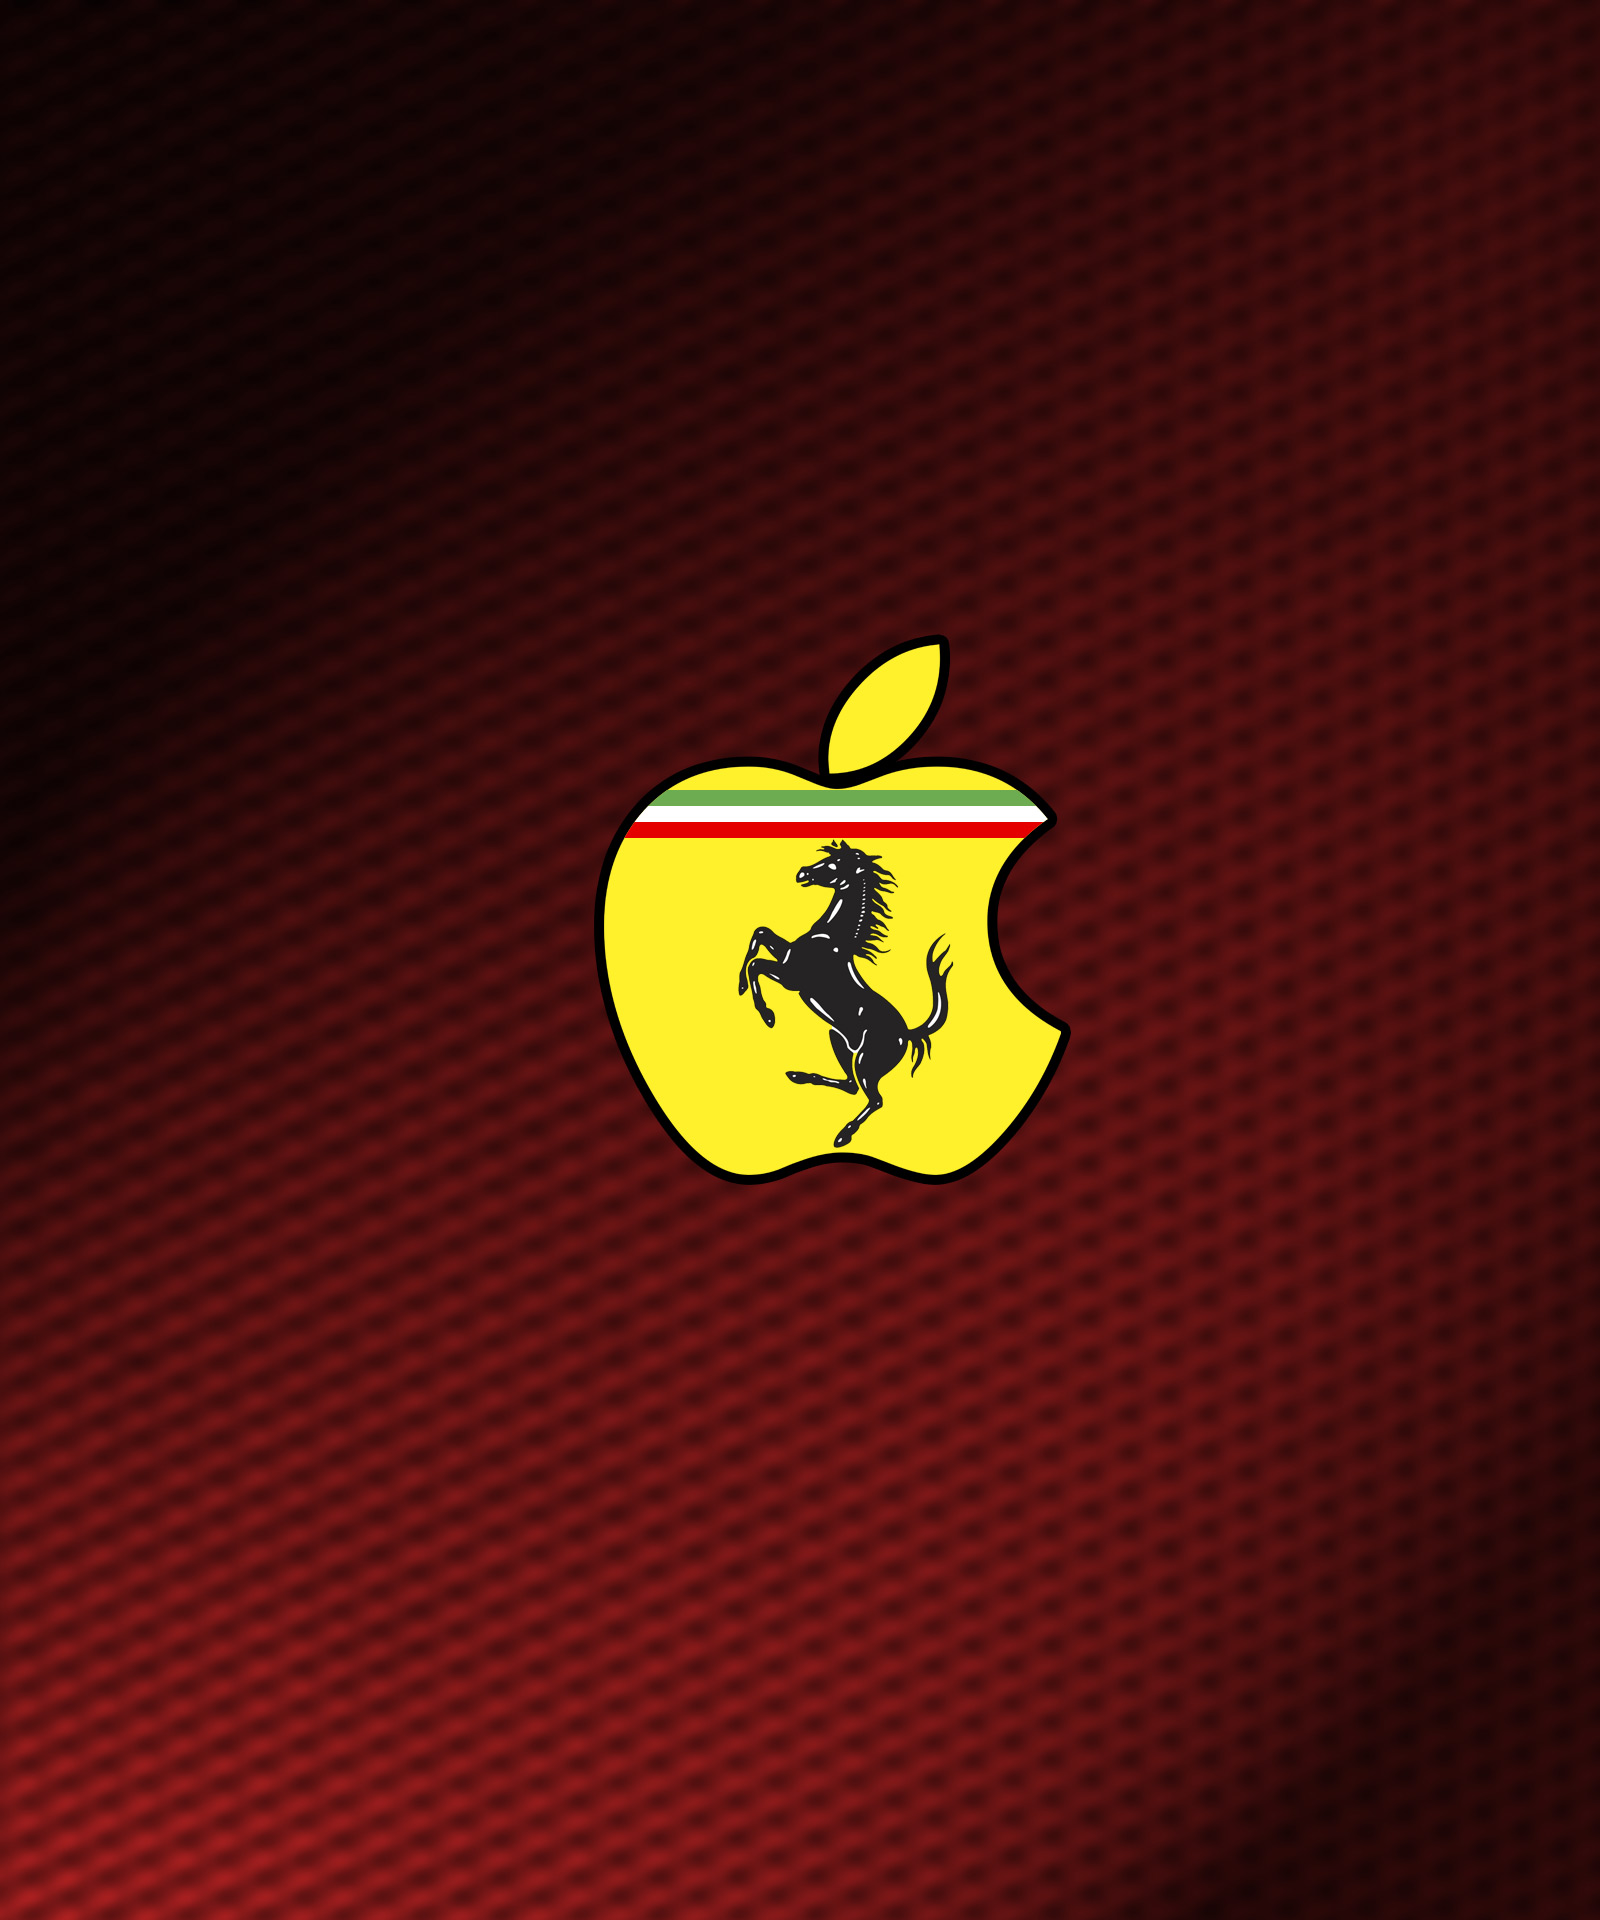 Ferrari Apple iPad Wallpaper iPadflava